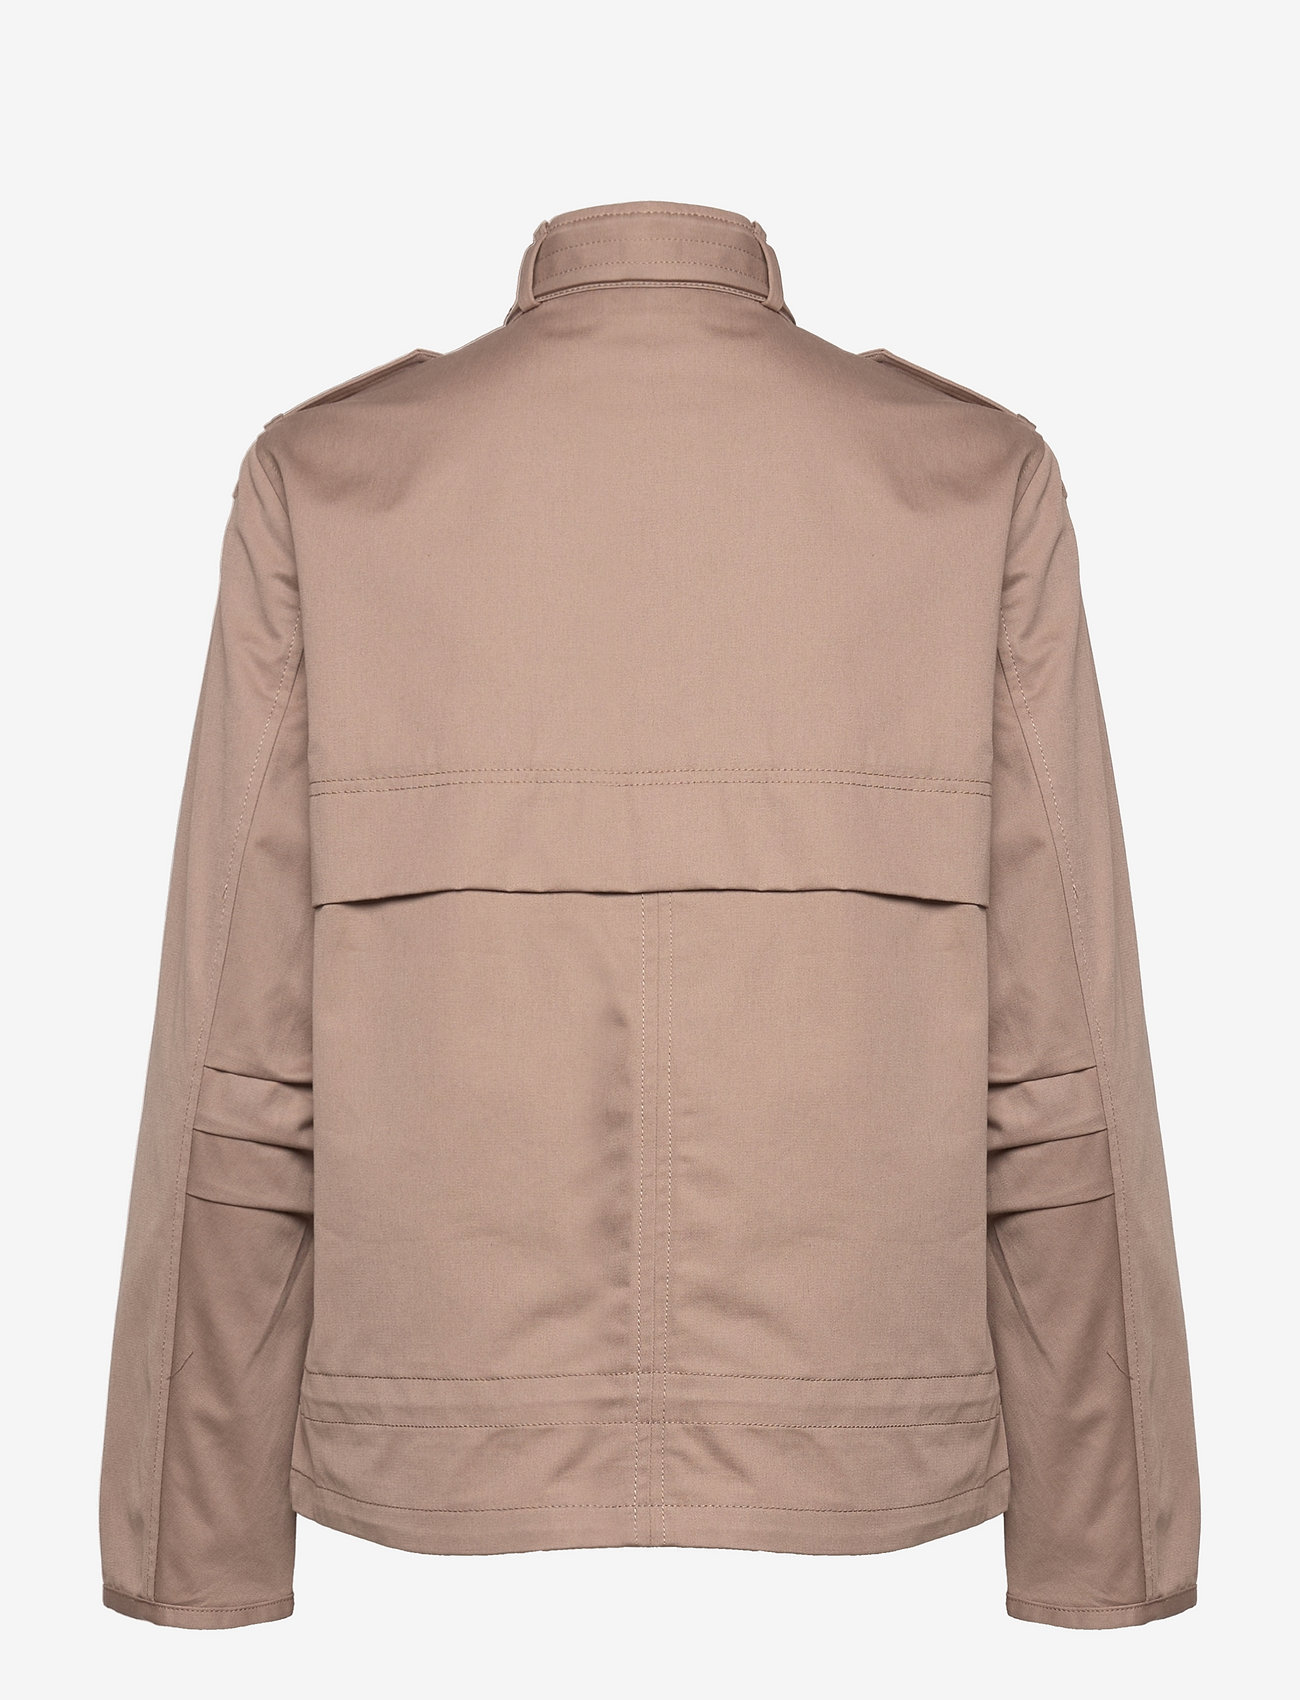 Esprit Casual - Outdoor jacket - darba stila jakas - taupe - 1